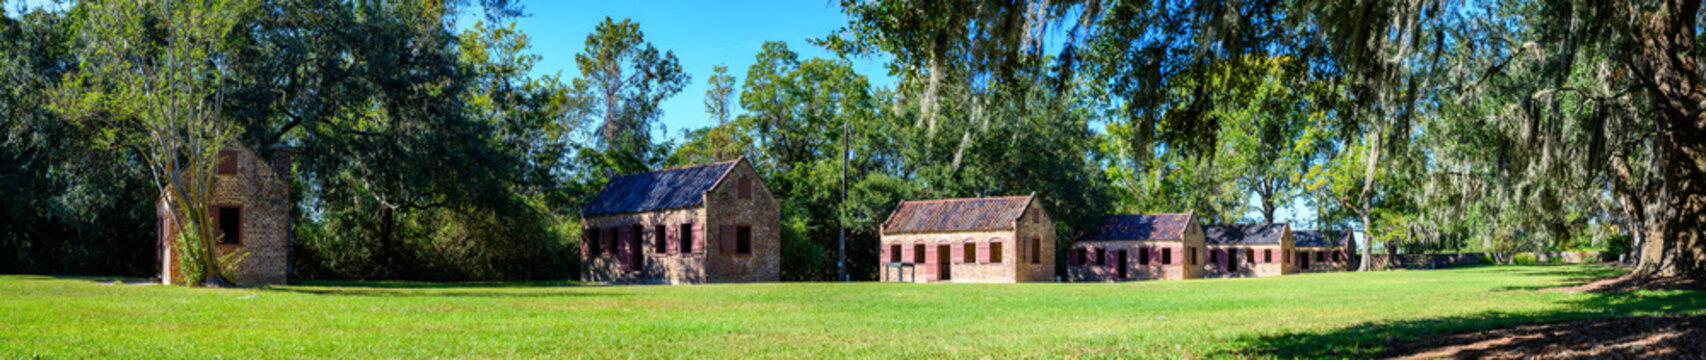 Boone Hall Plantation, Mt Pleasant, South Carolina, USA - 10/2019:  Panoramic photo of slave quarters adjacent to oak lined road